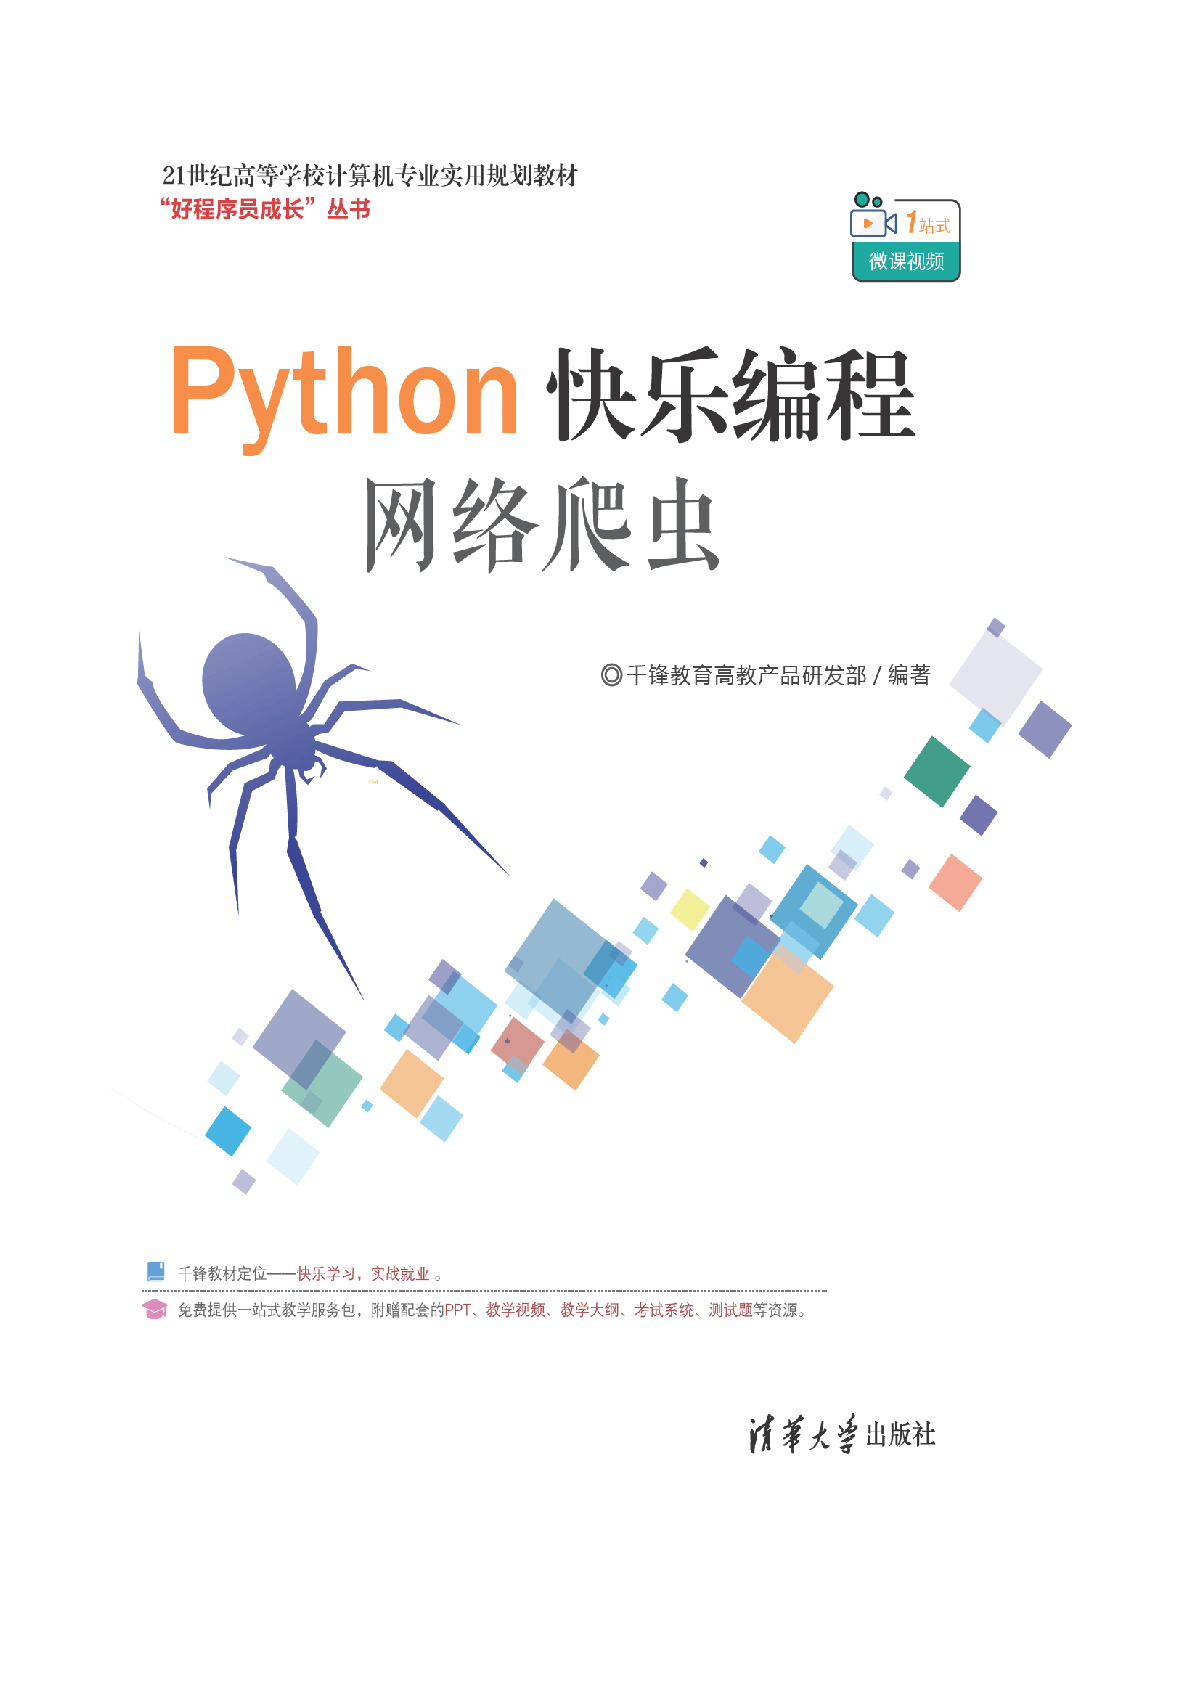 Python快乐编程——网络爬虫